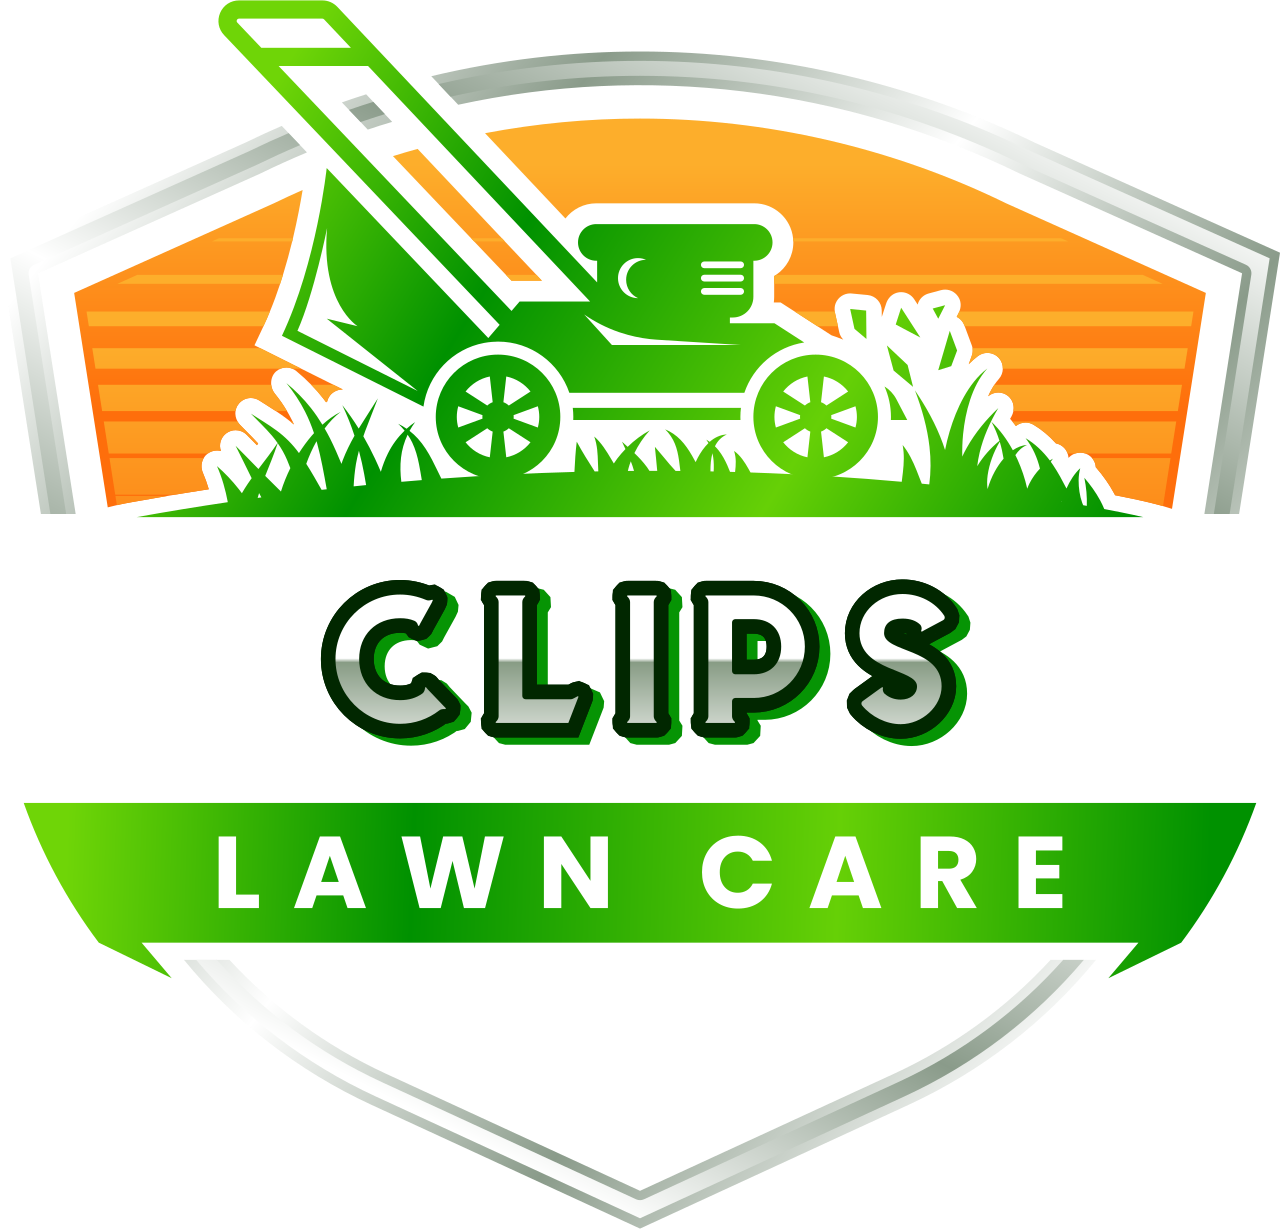 Clips's logo